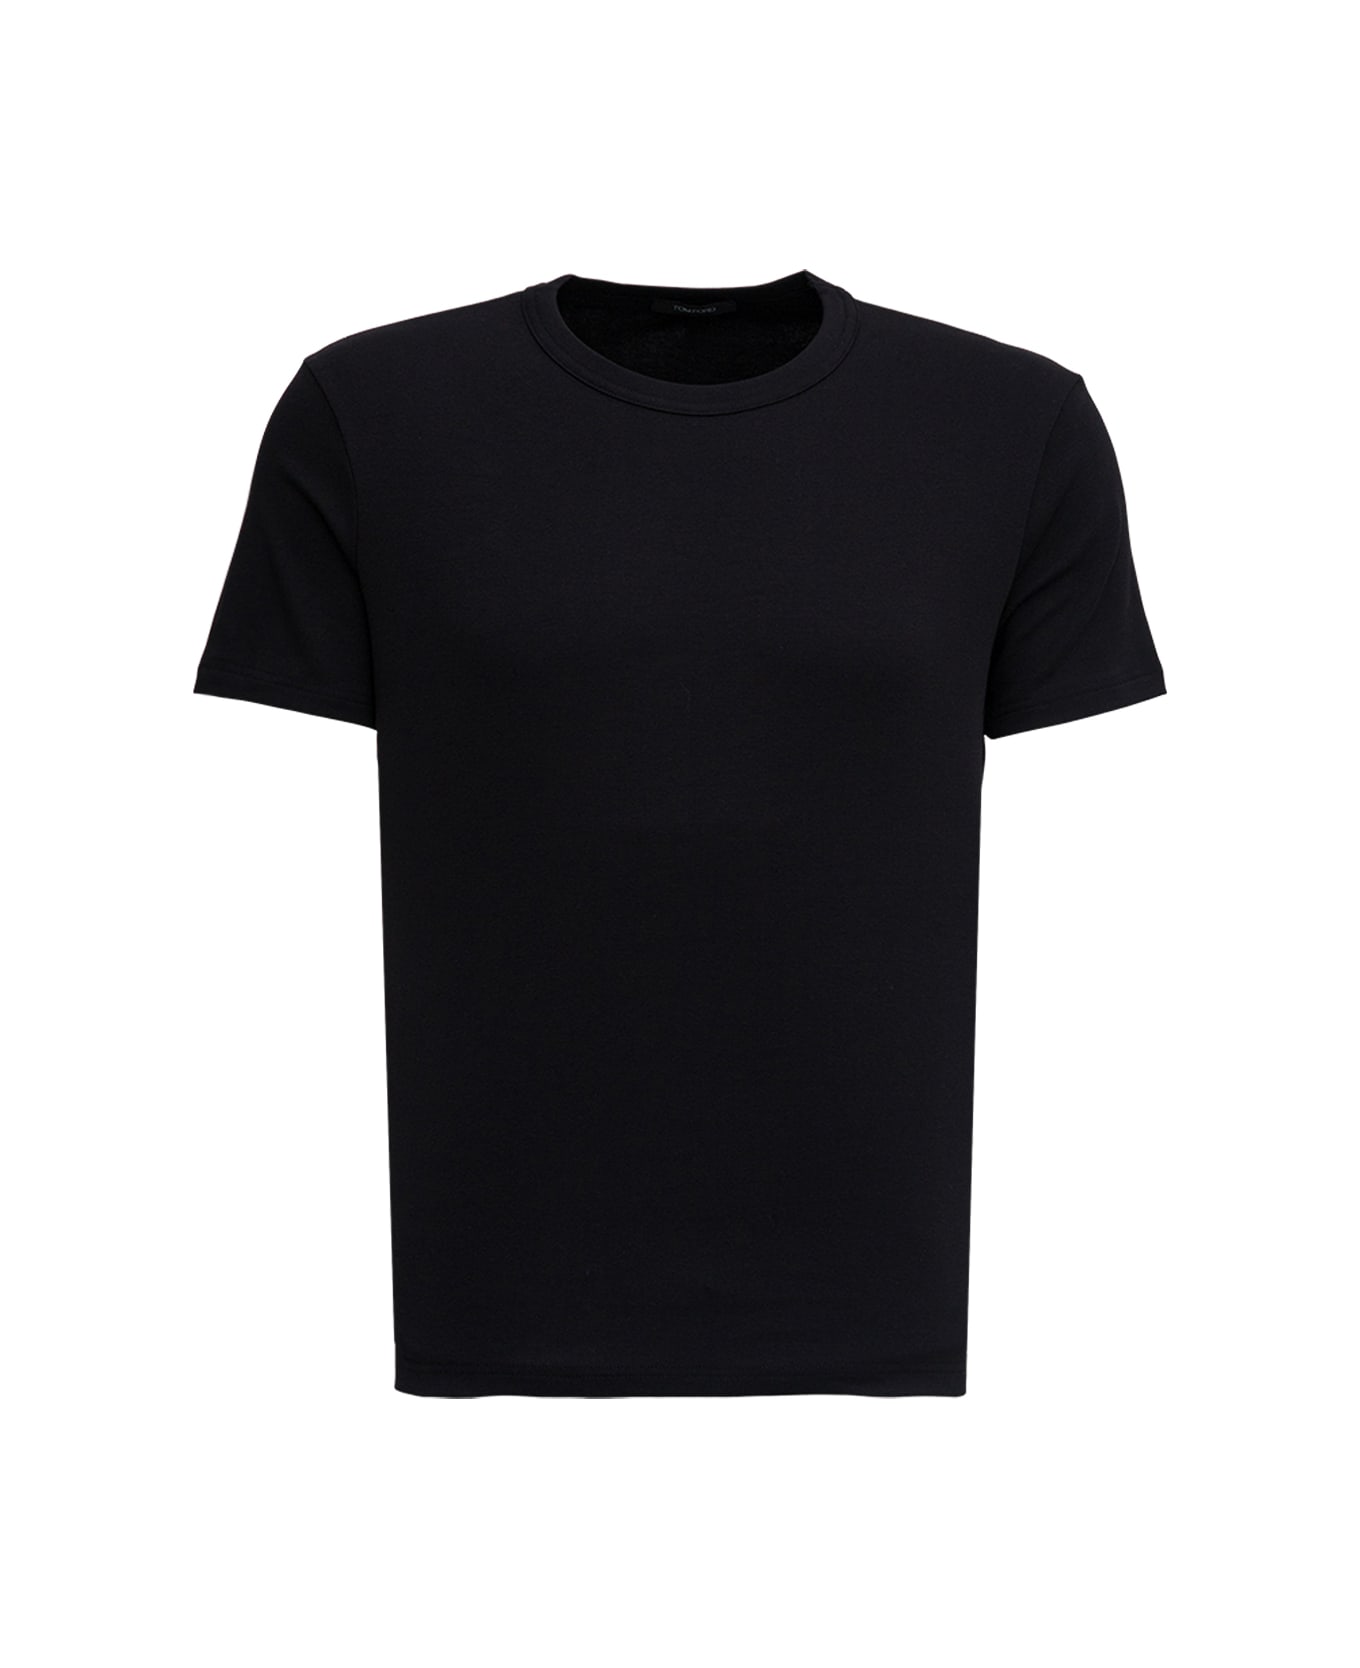 Tom Ford Black Cotton Crew Neck T-shirt Man - BLACK